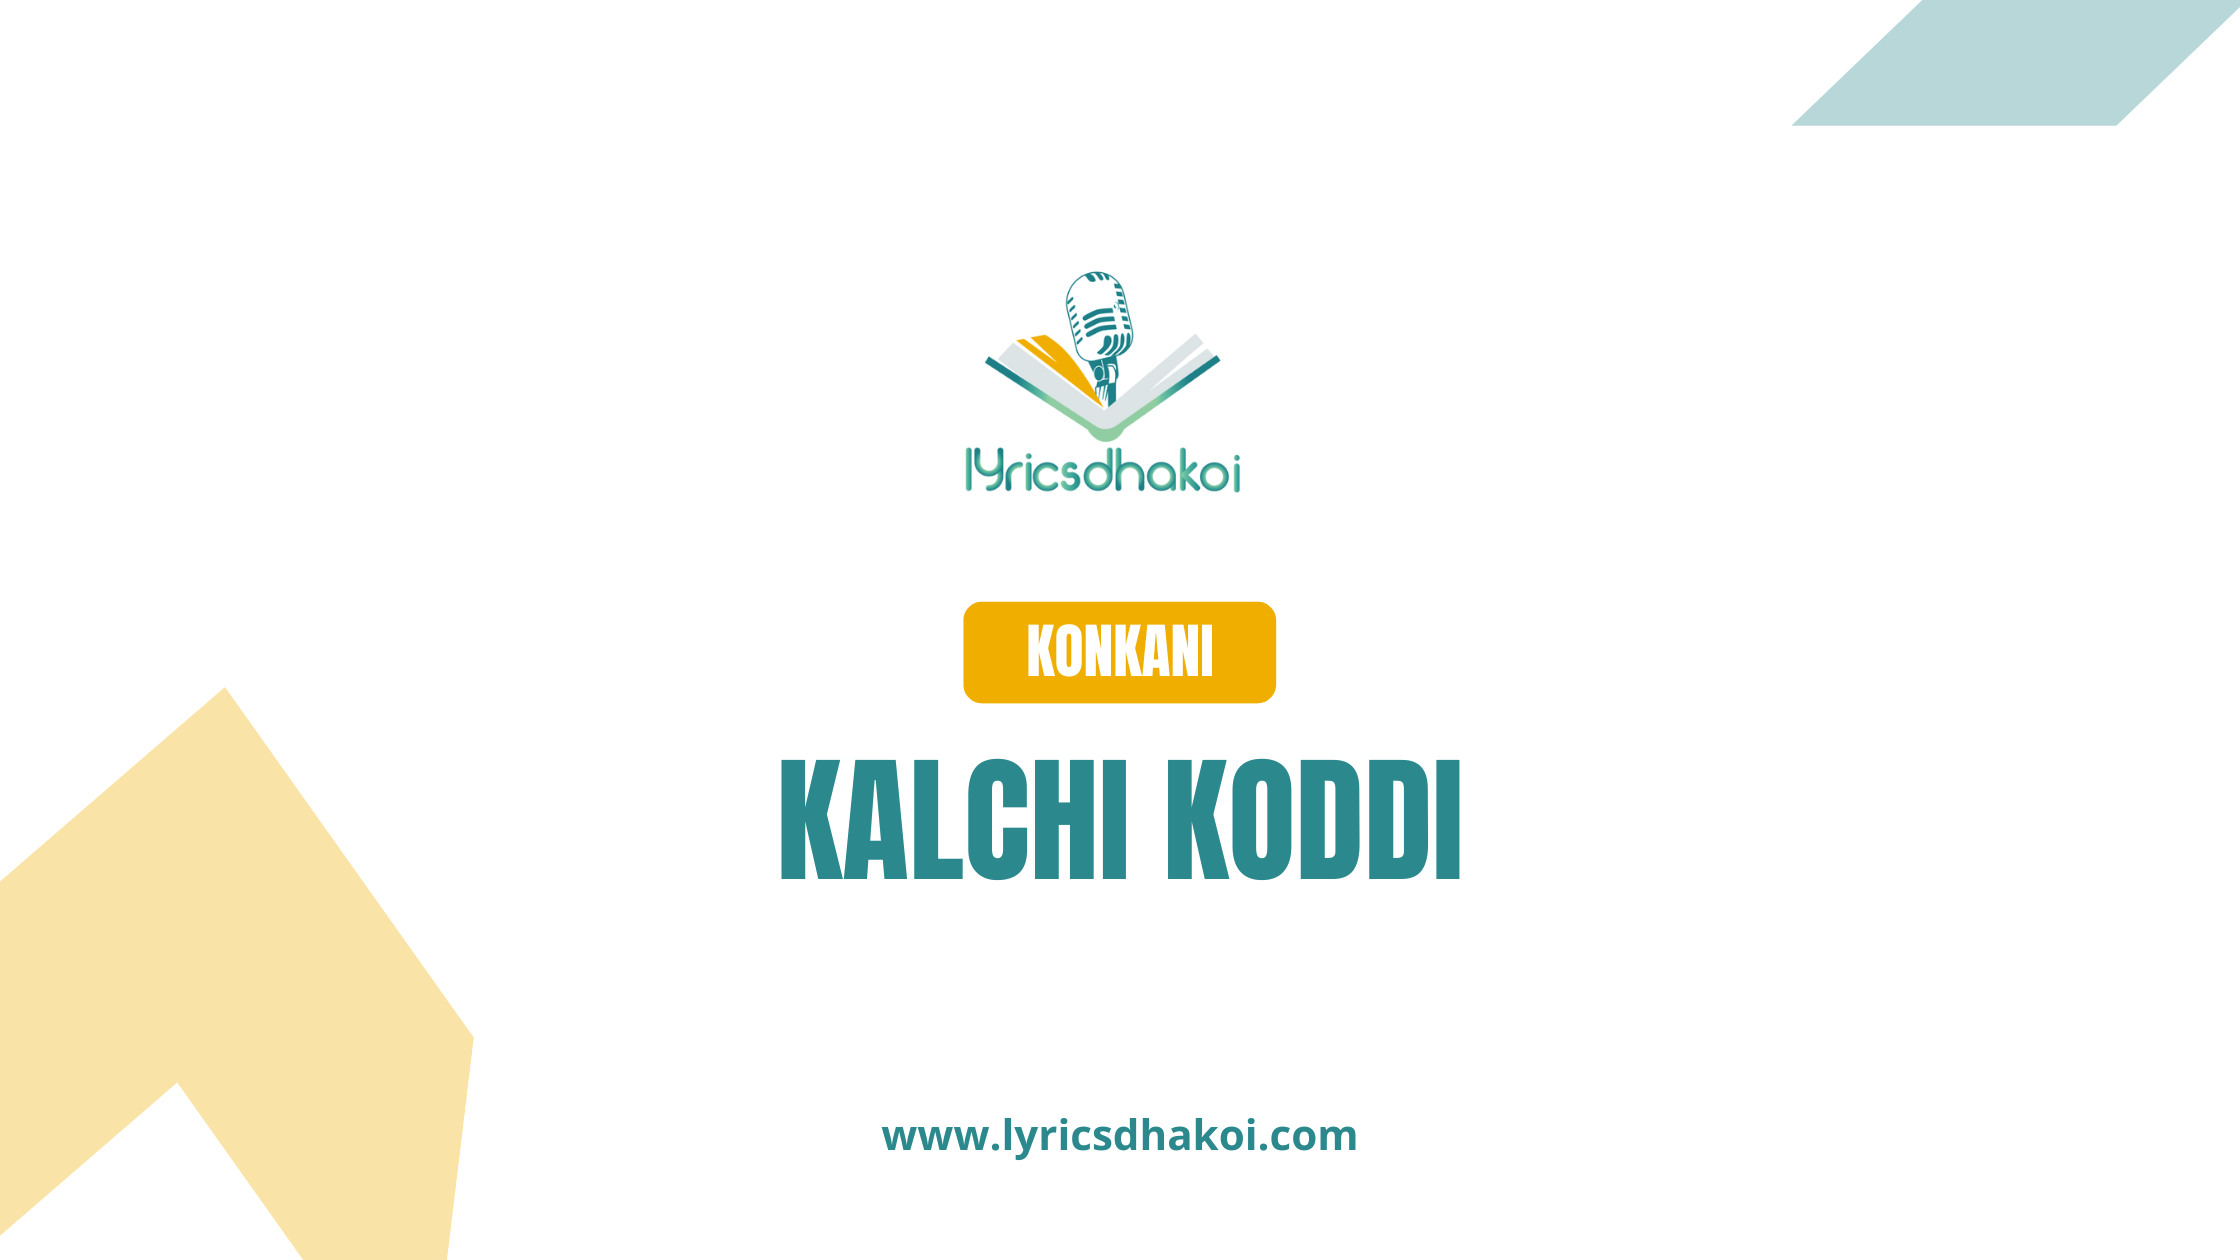 Kalchi Koddi Konkani Lyrics for Karaoke Online - LyricsDhakoi.com